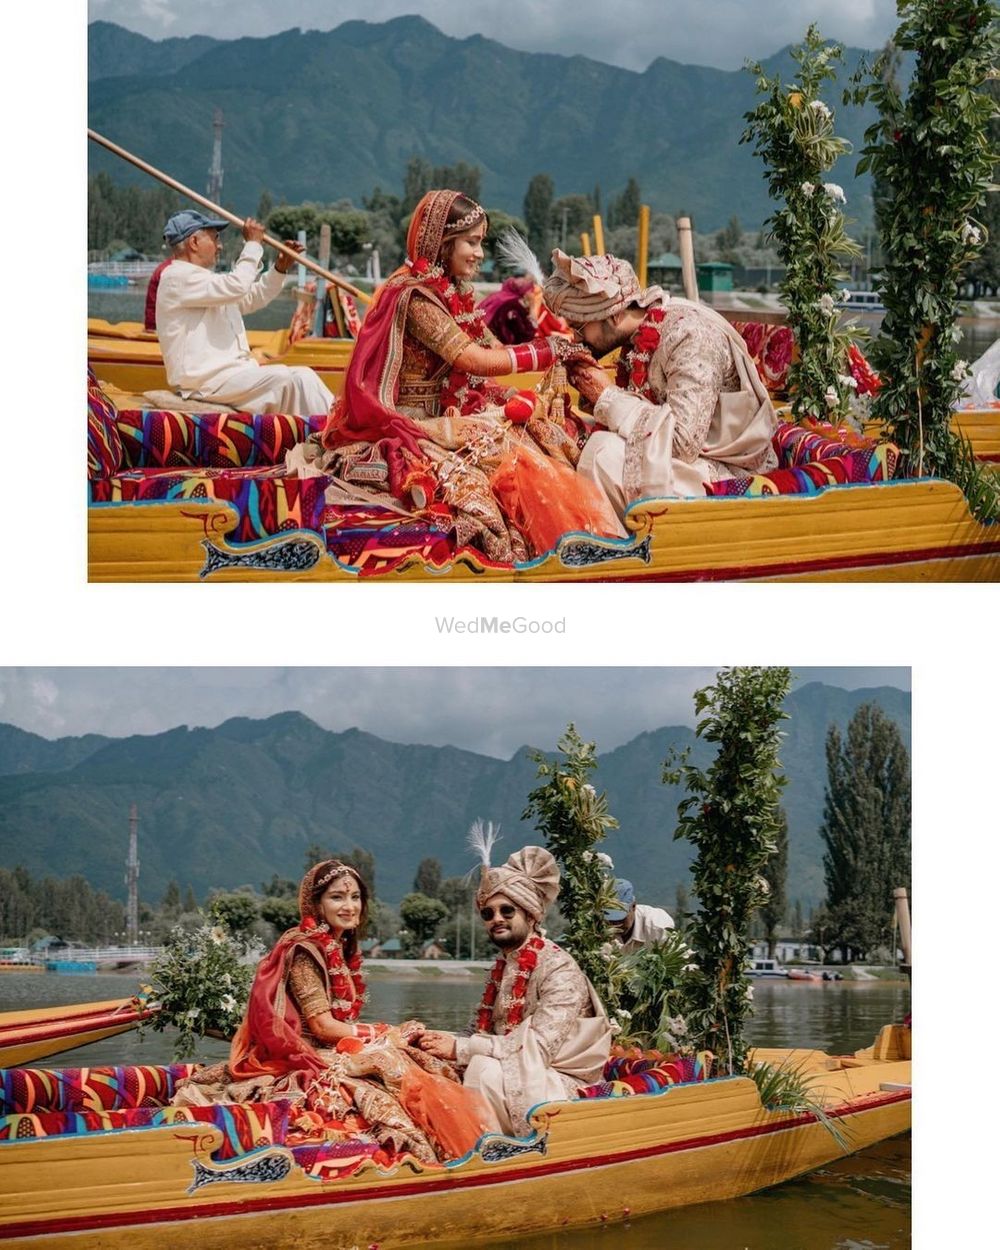 Photo By Greenath Kashmir Events - Wedding Planners